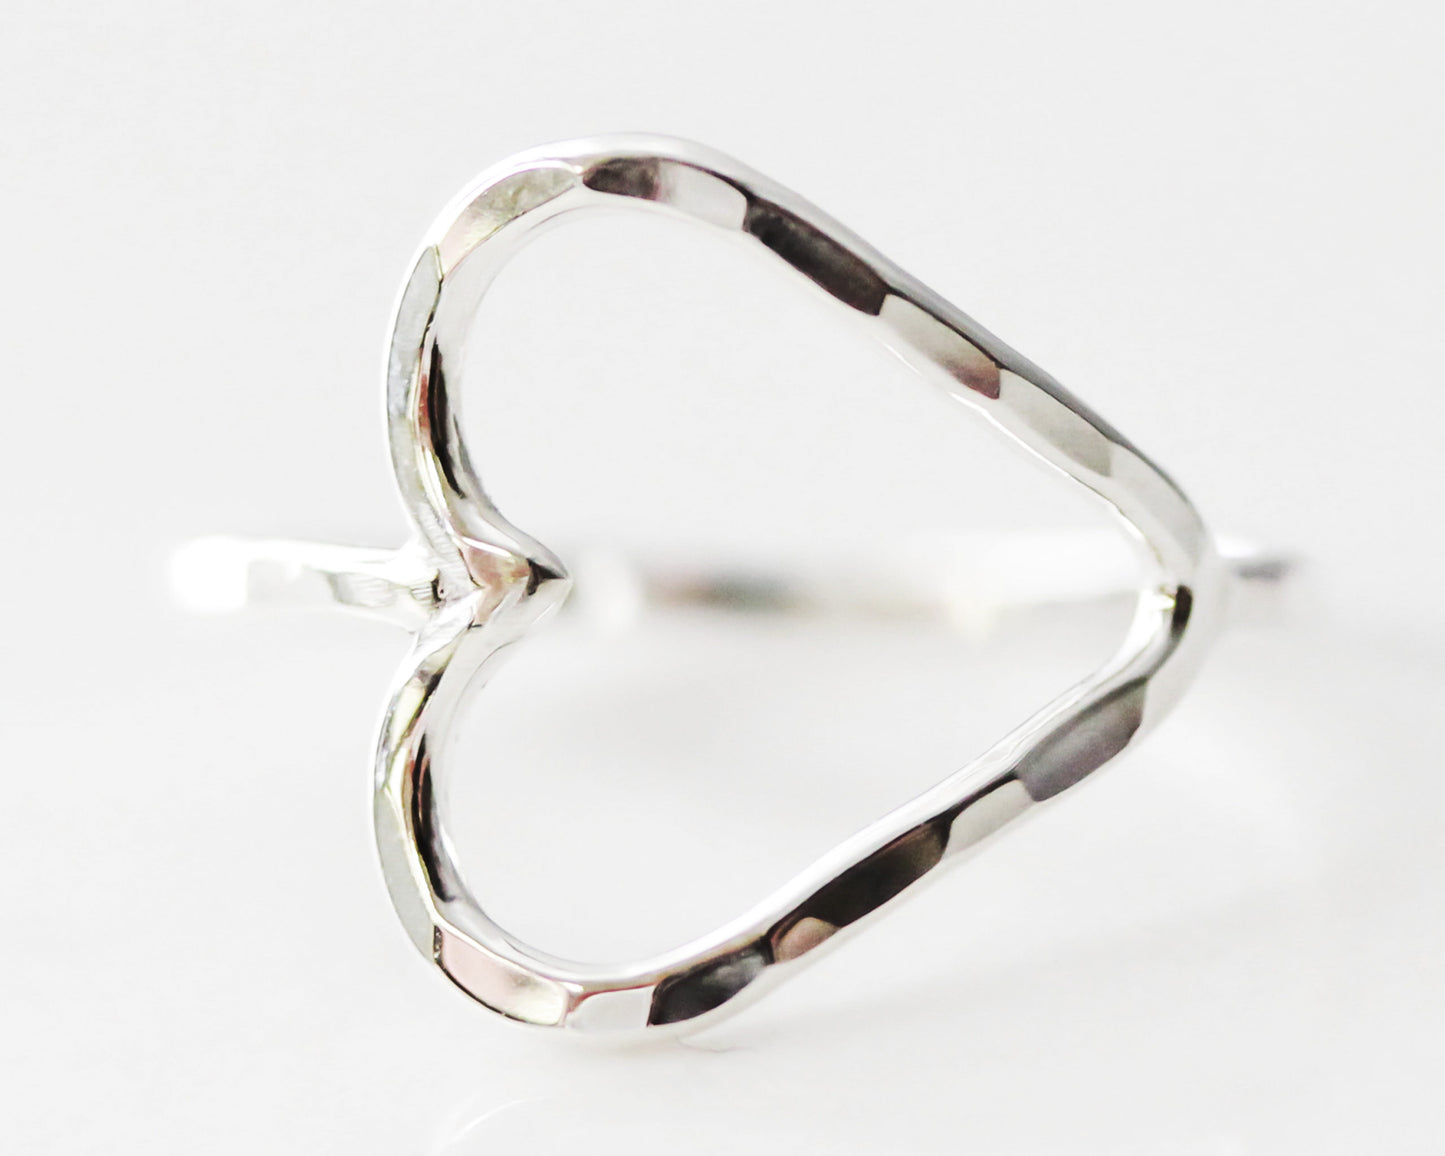 The Smitten Ring